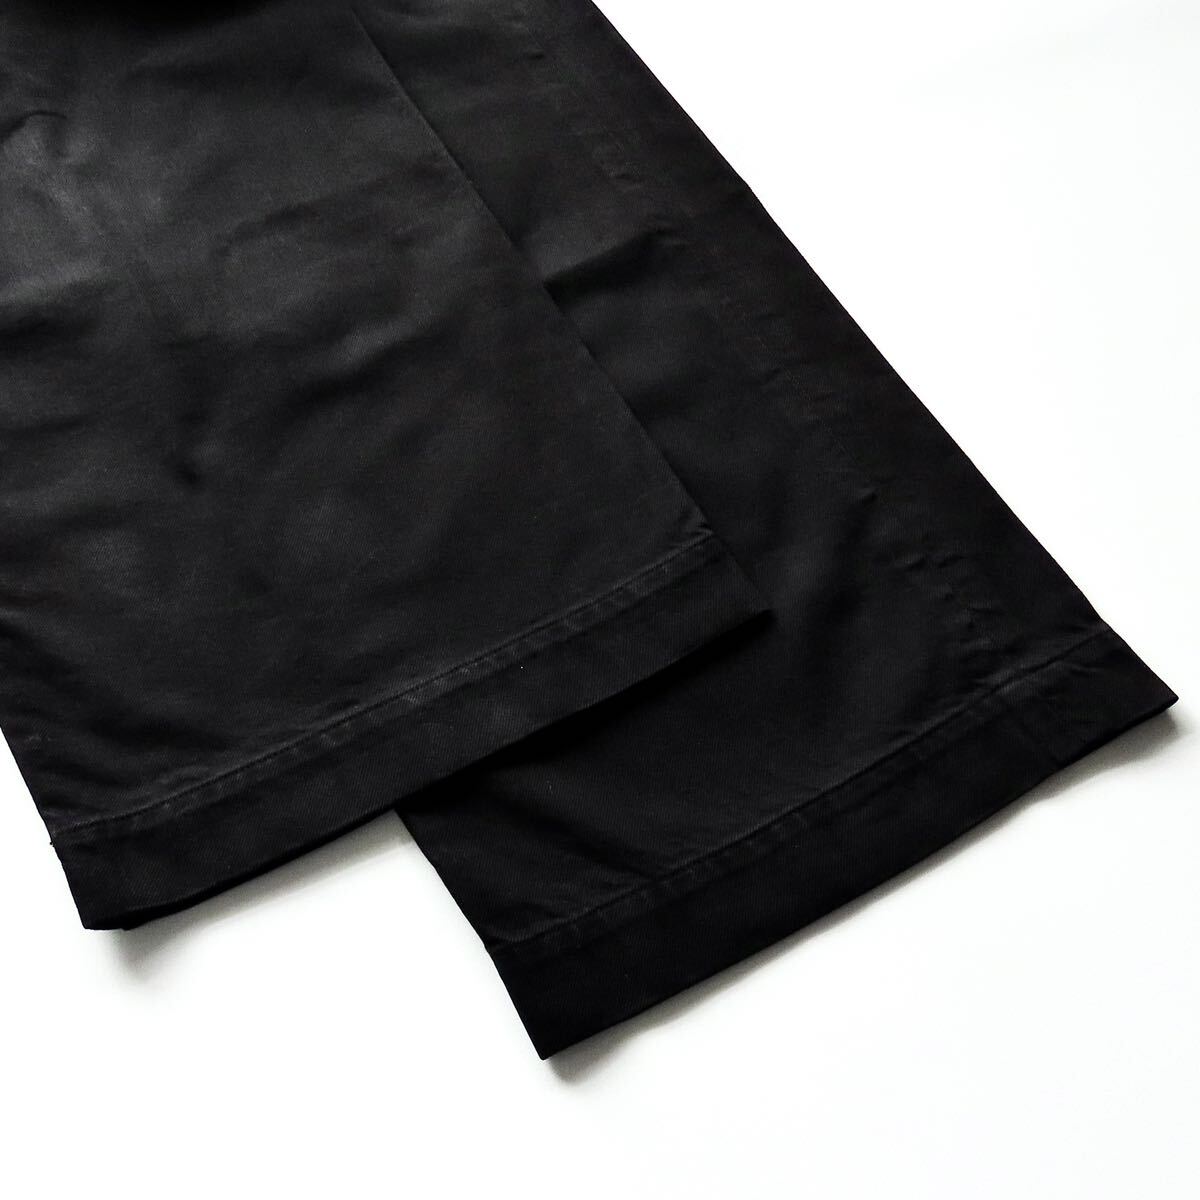 45R... Denim. 908 painter's pants ( после окраска ) 1 S черный широкий Denim распорка брюки Gin Bab e хлопок R вышивка 45rpm